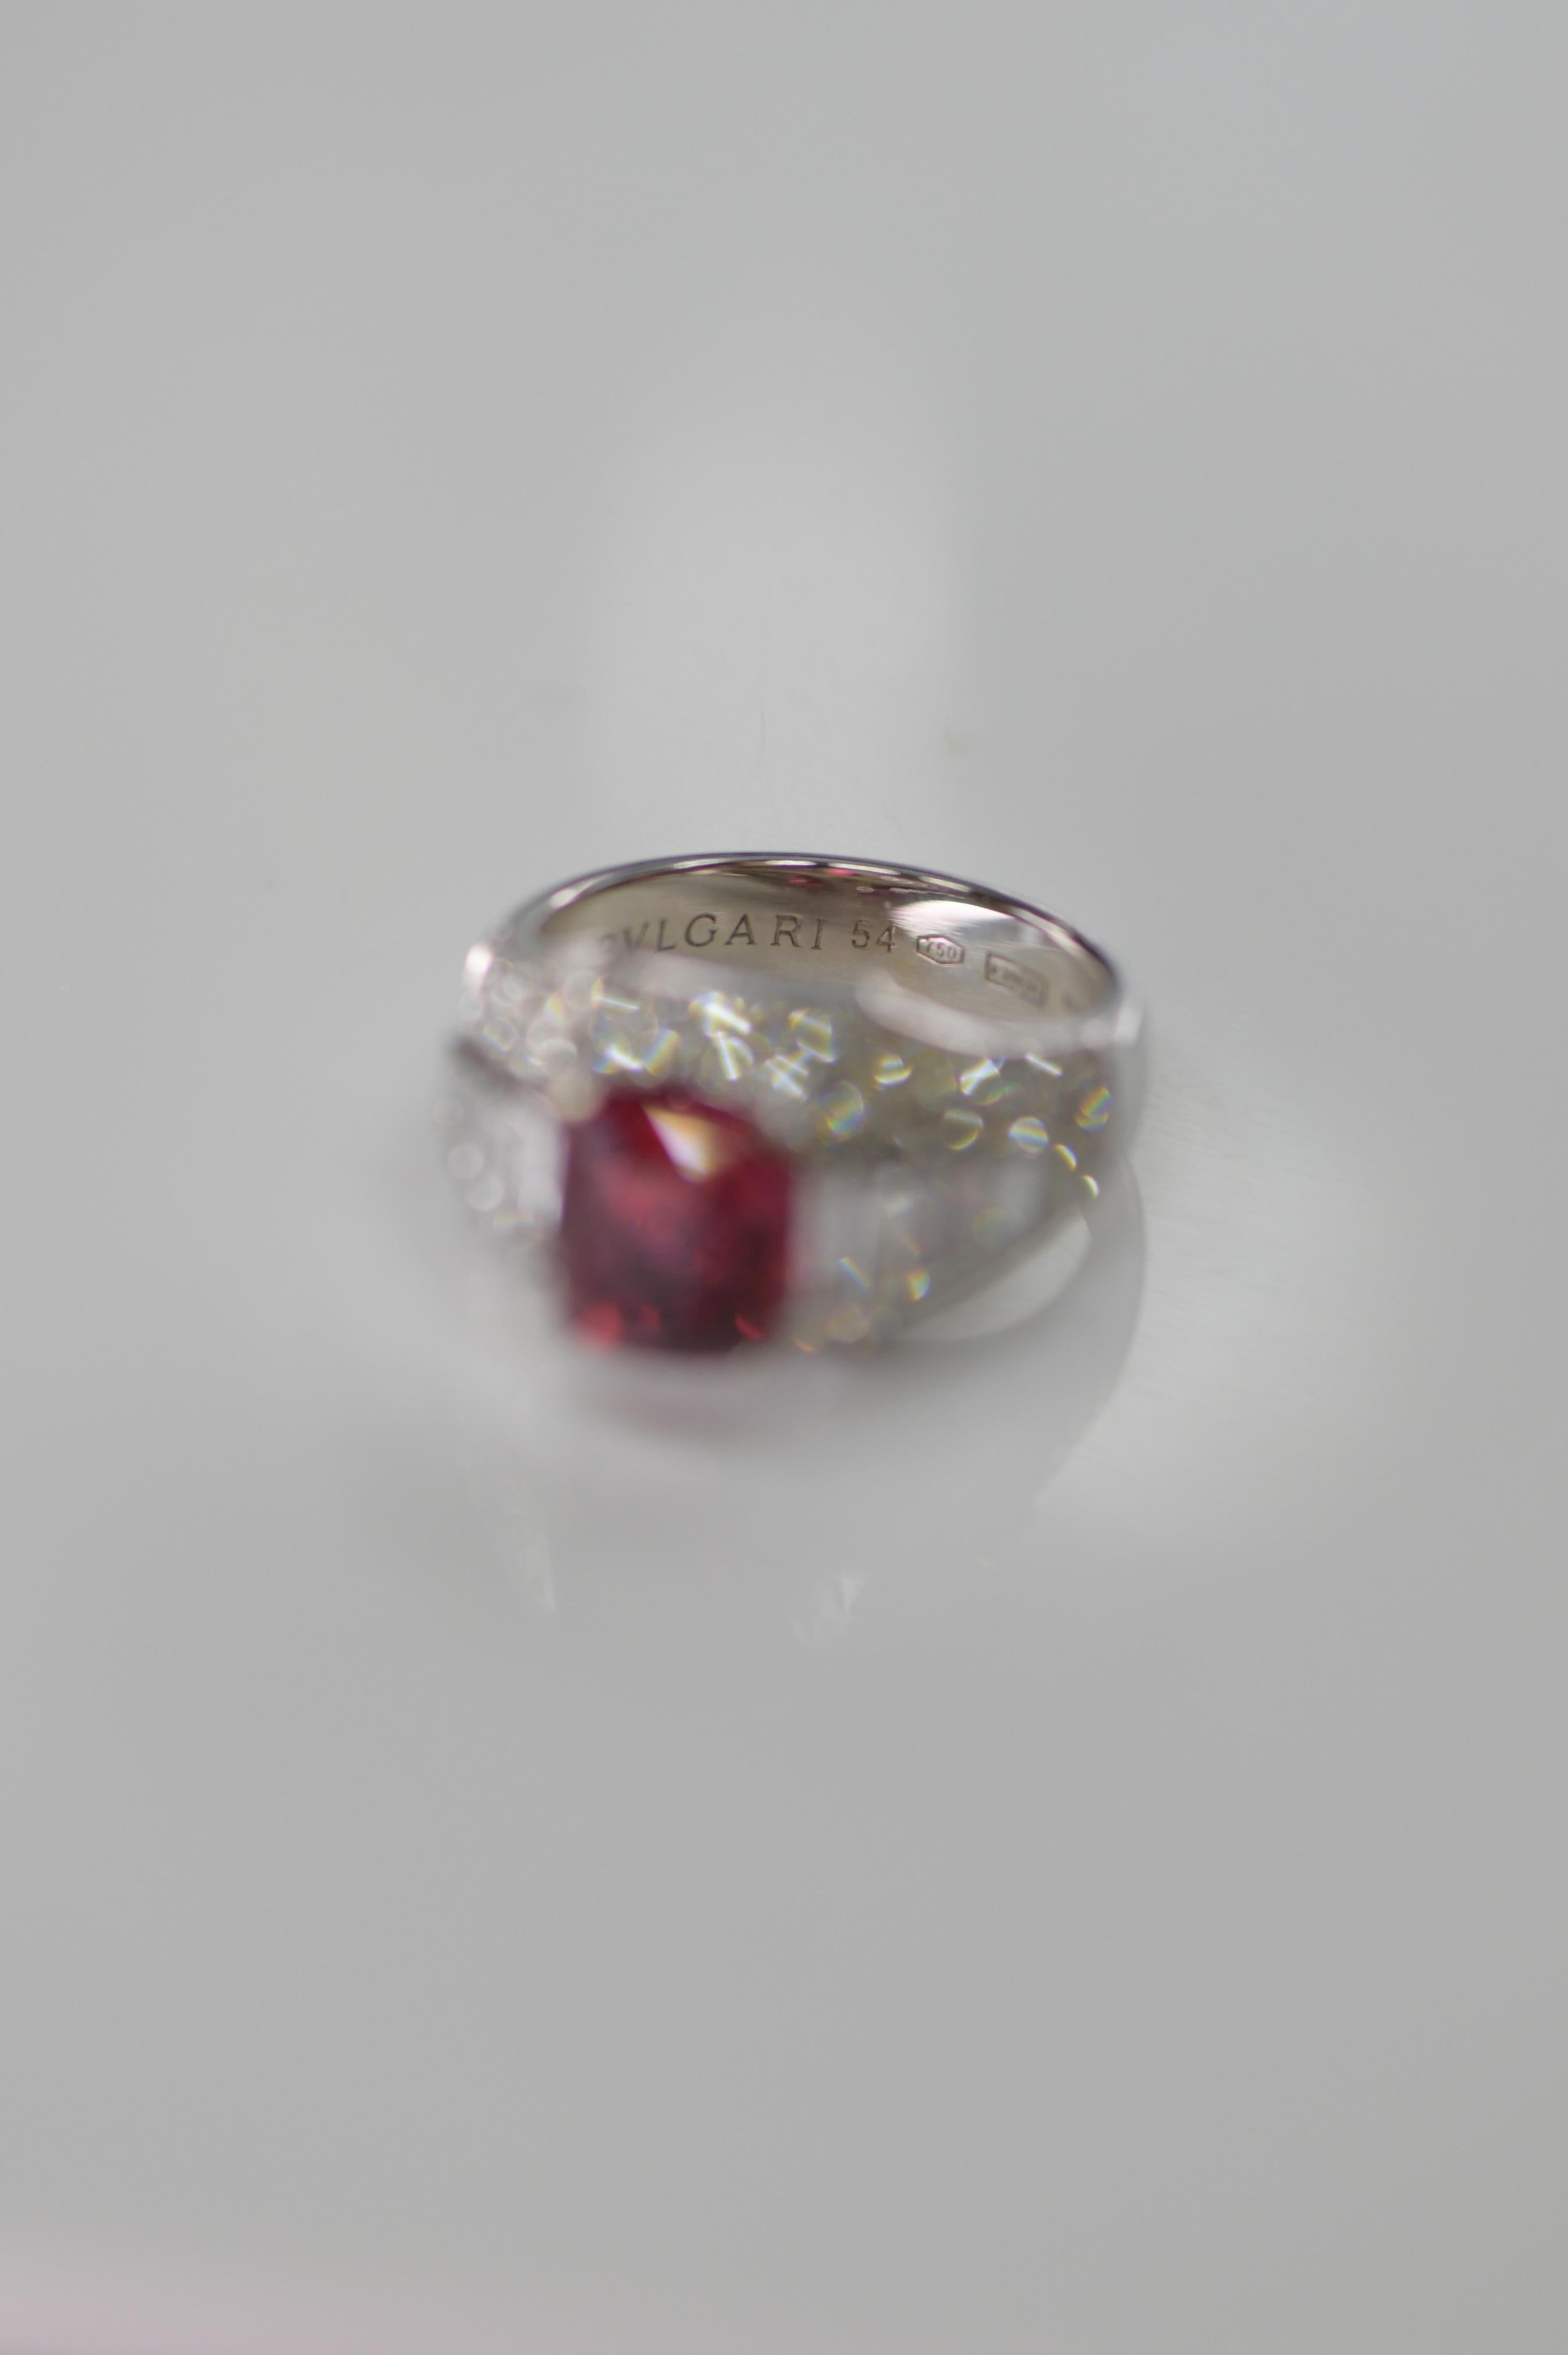 Rare Burma Red Spinel and Diamond Ring by Bulgari 1